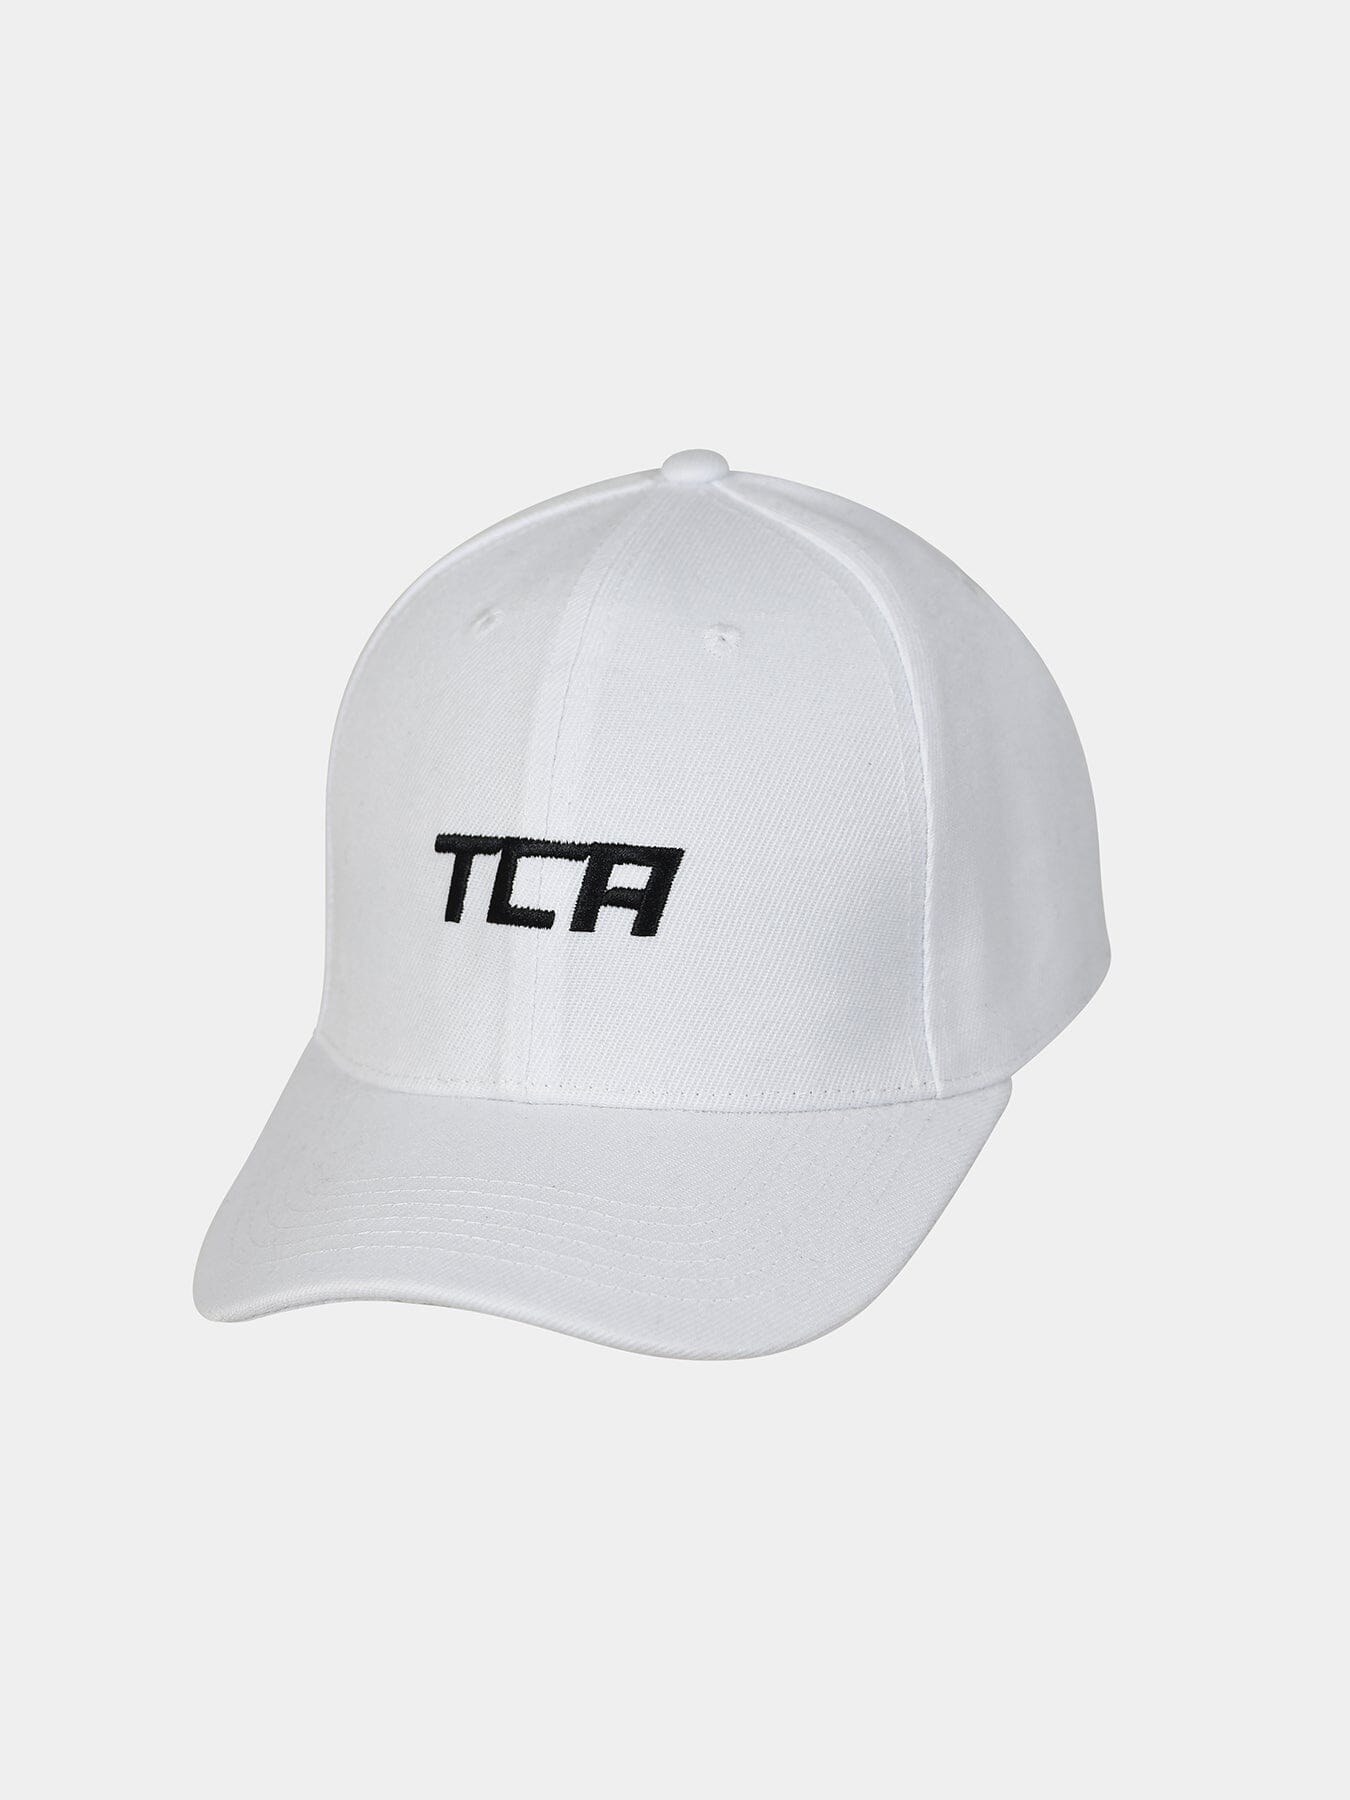 TCA Running Cap Unisex Casual Outdoor Sports Hat Adjustable Baseball Cap for Men & Women